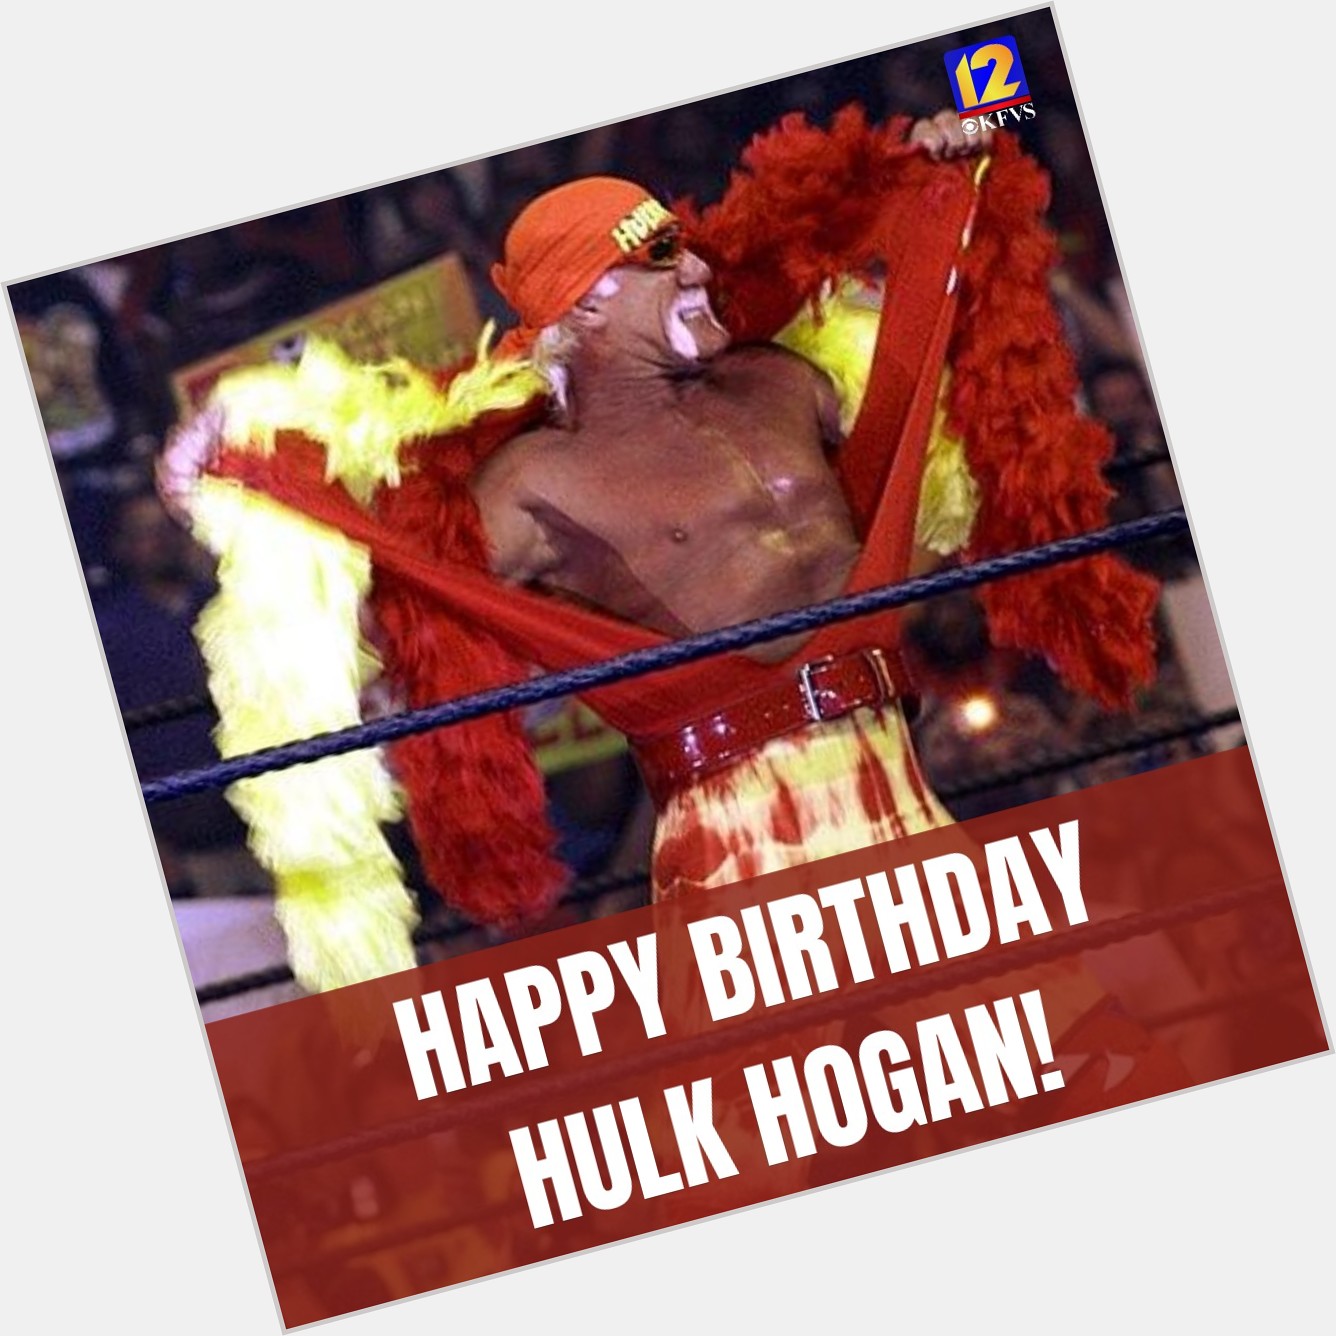 Happy birthday, brother! Hulk Hogan turns 67 today. 